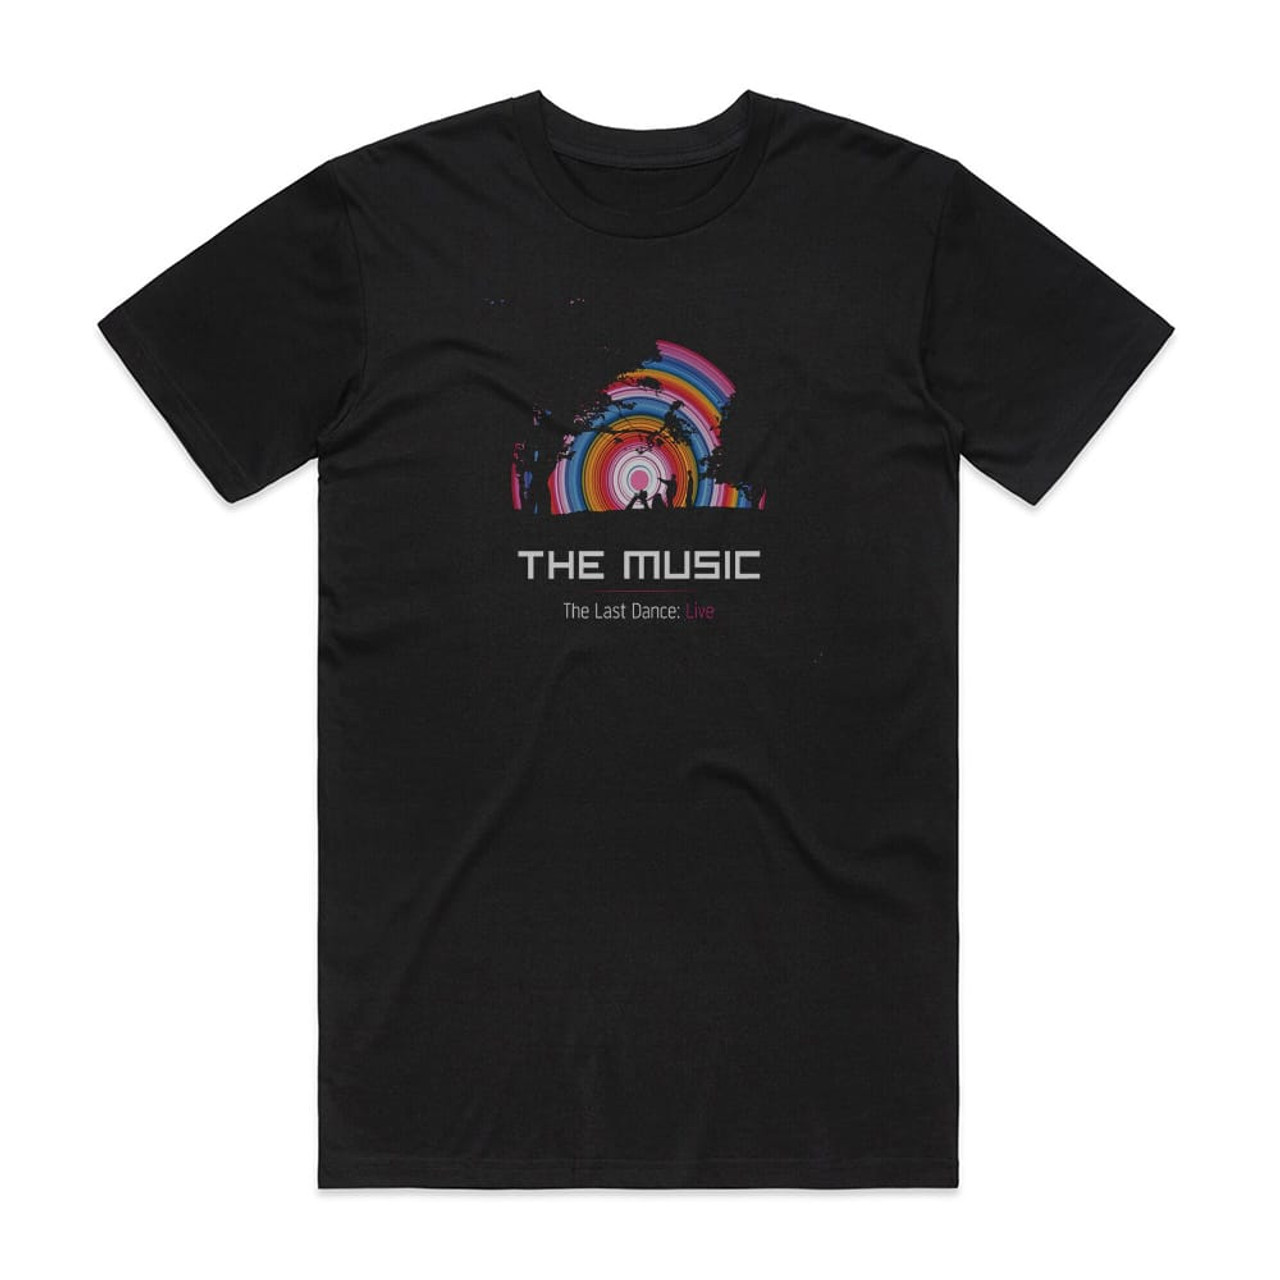 The Music The Last Dance Live Album Cover T-Shirt Black